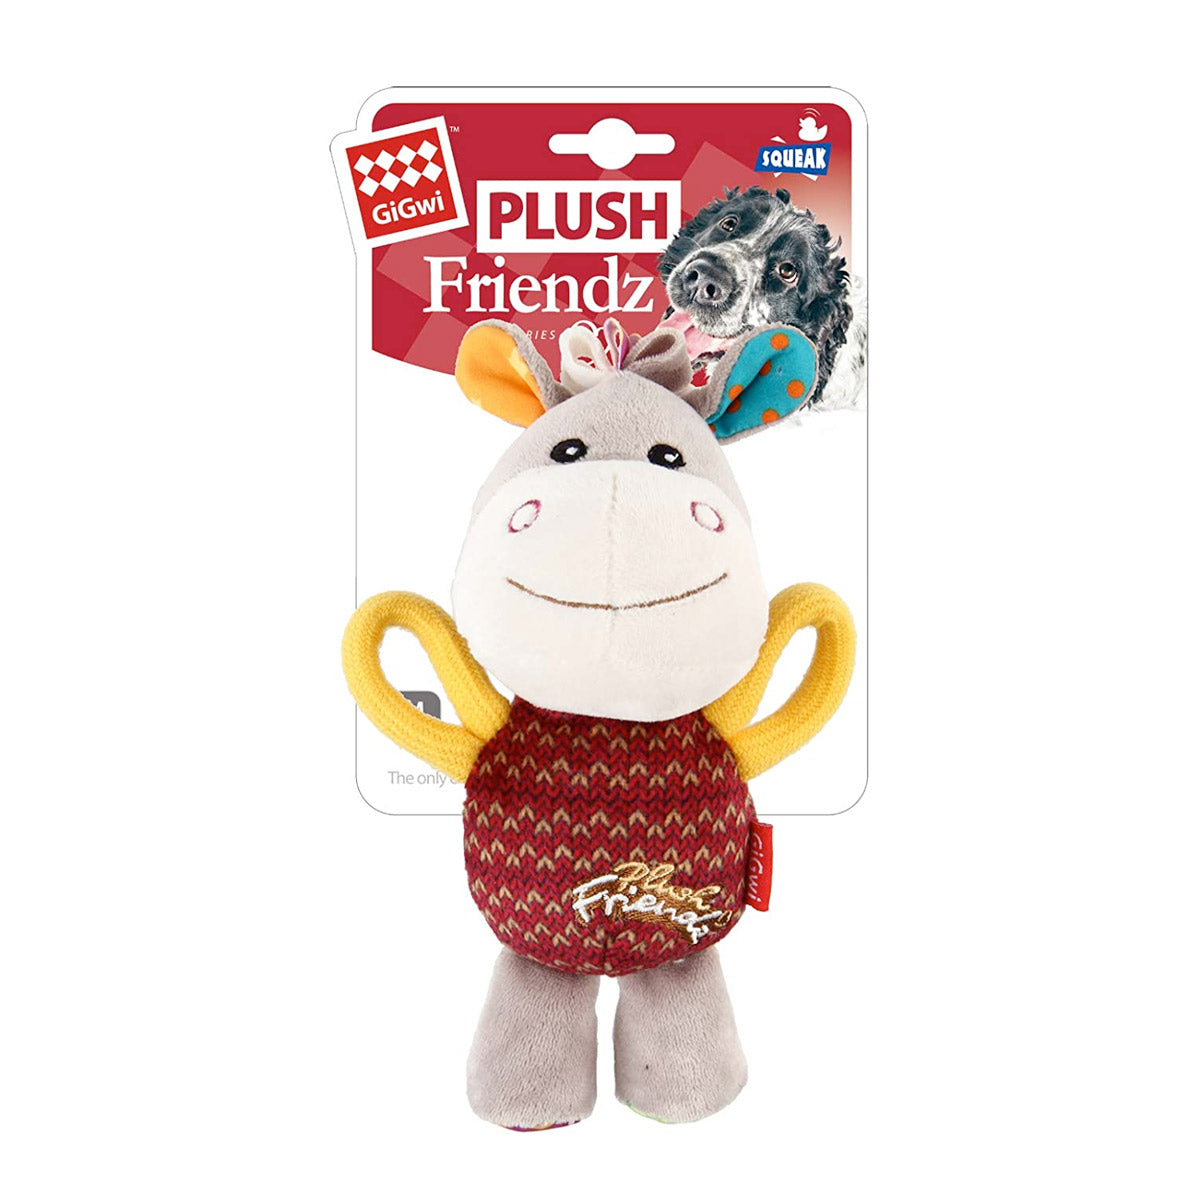 GIGWI Plush Friendz with Squeaker inside (Donkey)